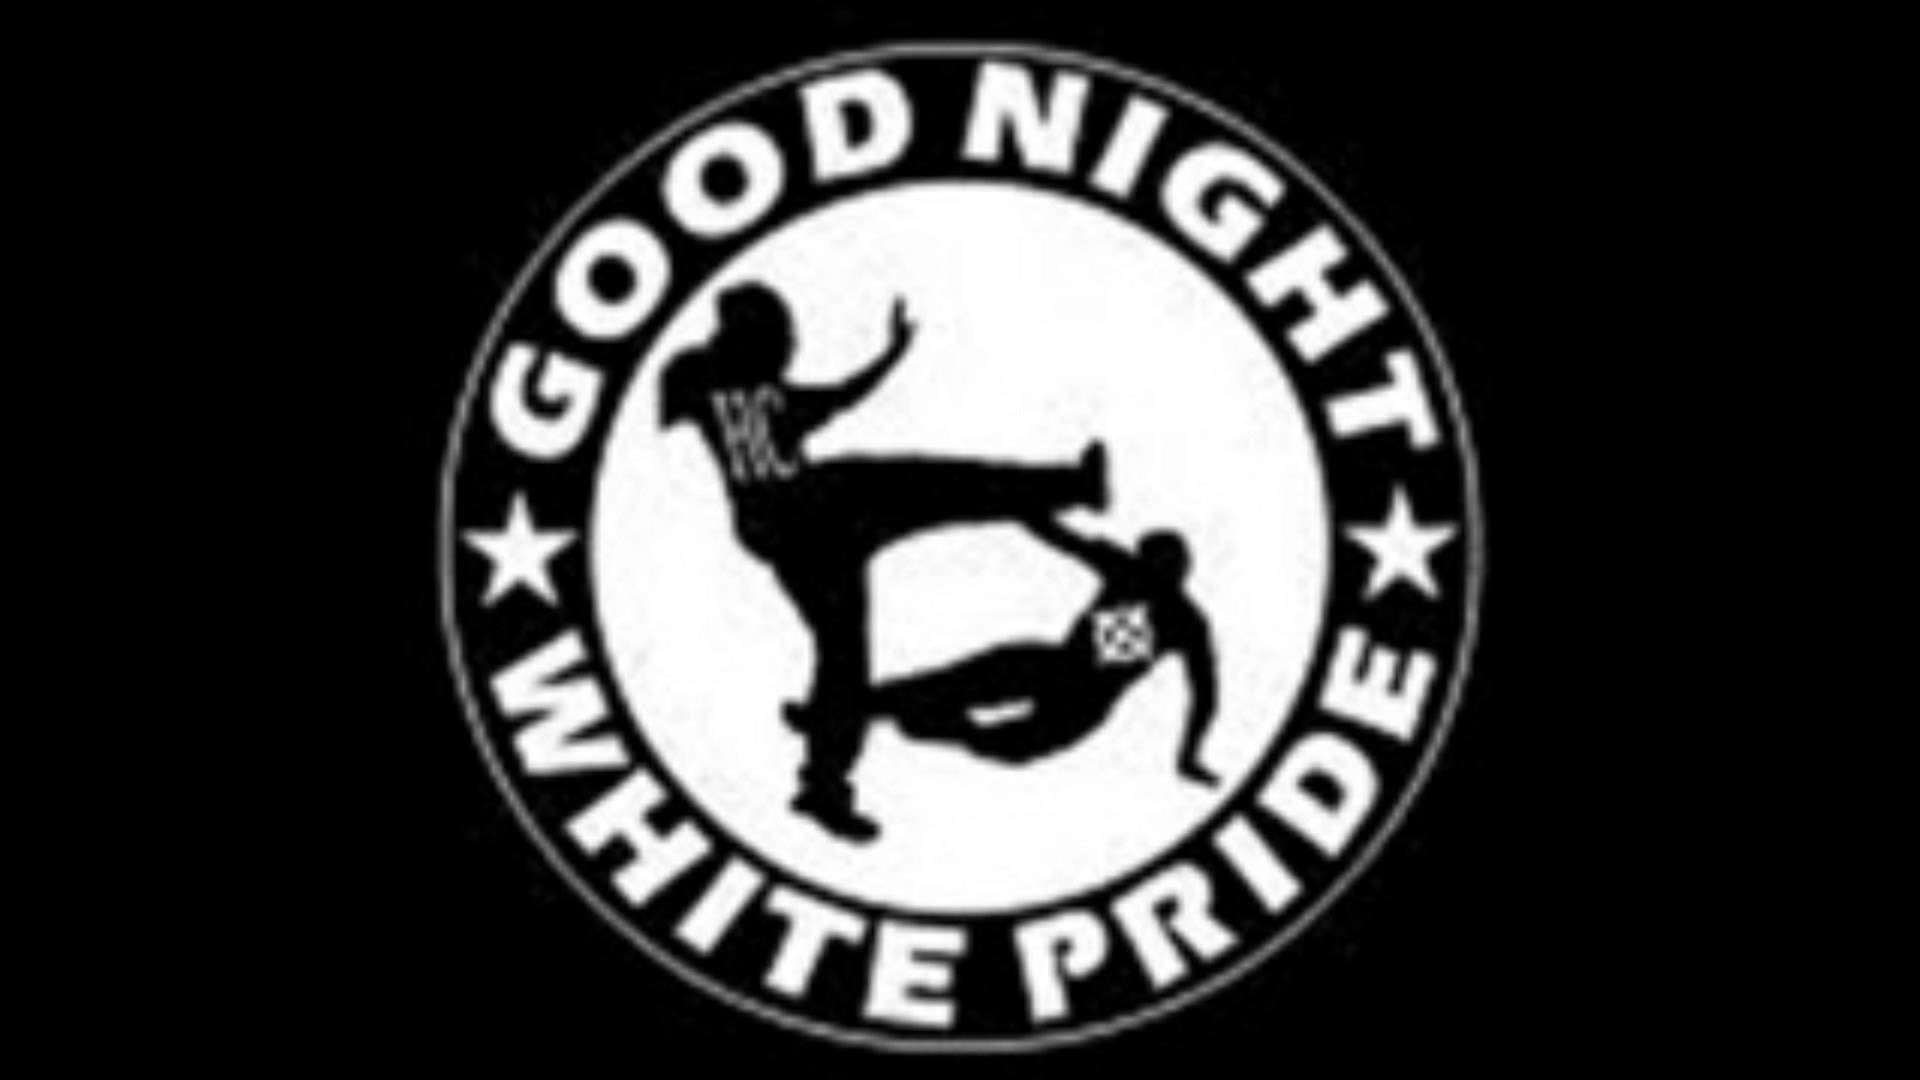 Good Night White Pride - HD Wallpaper 